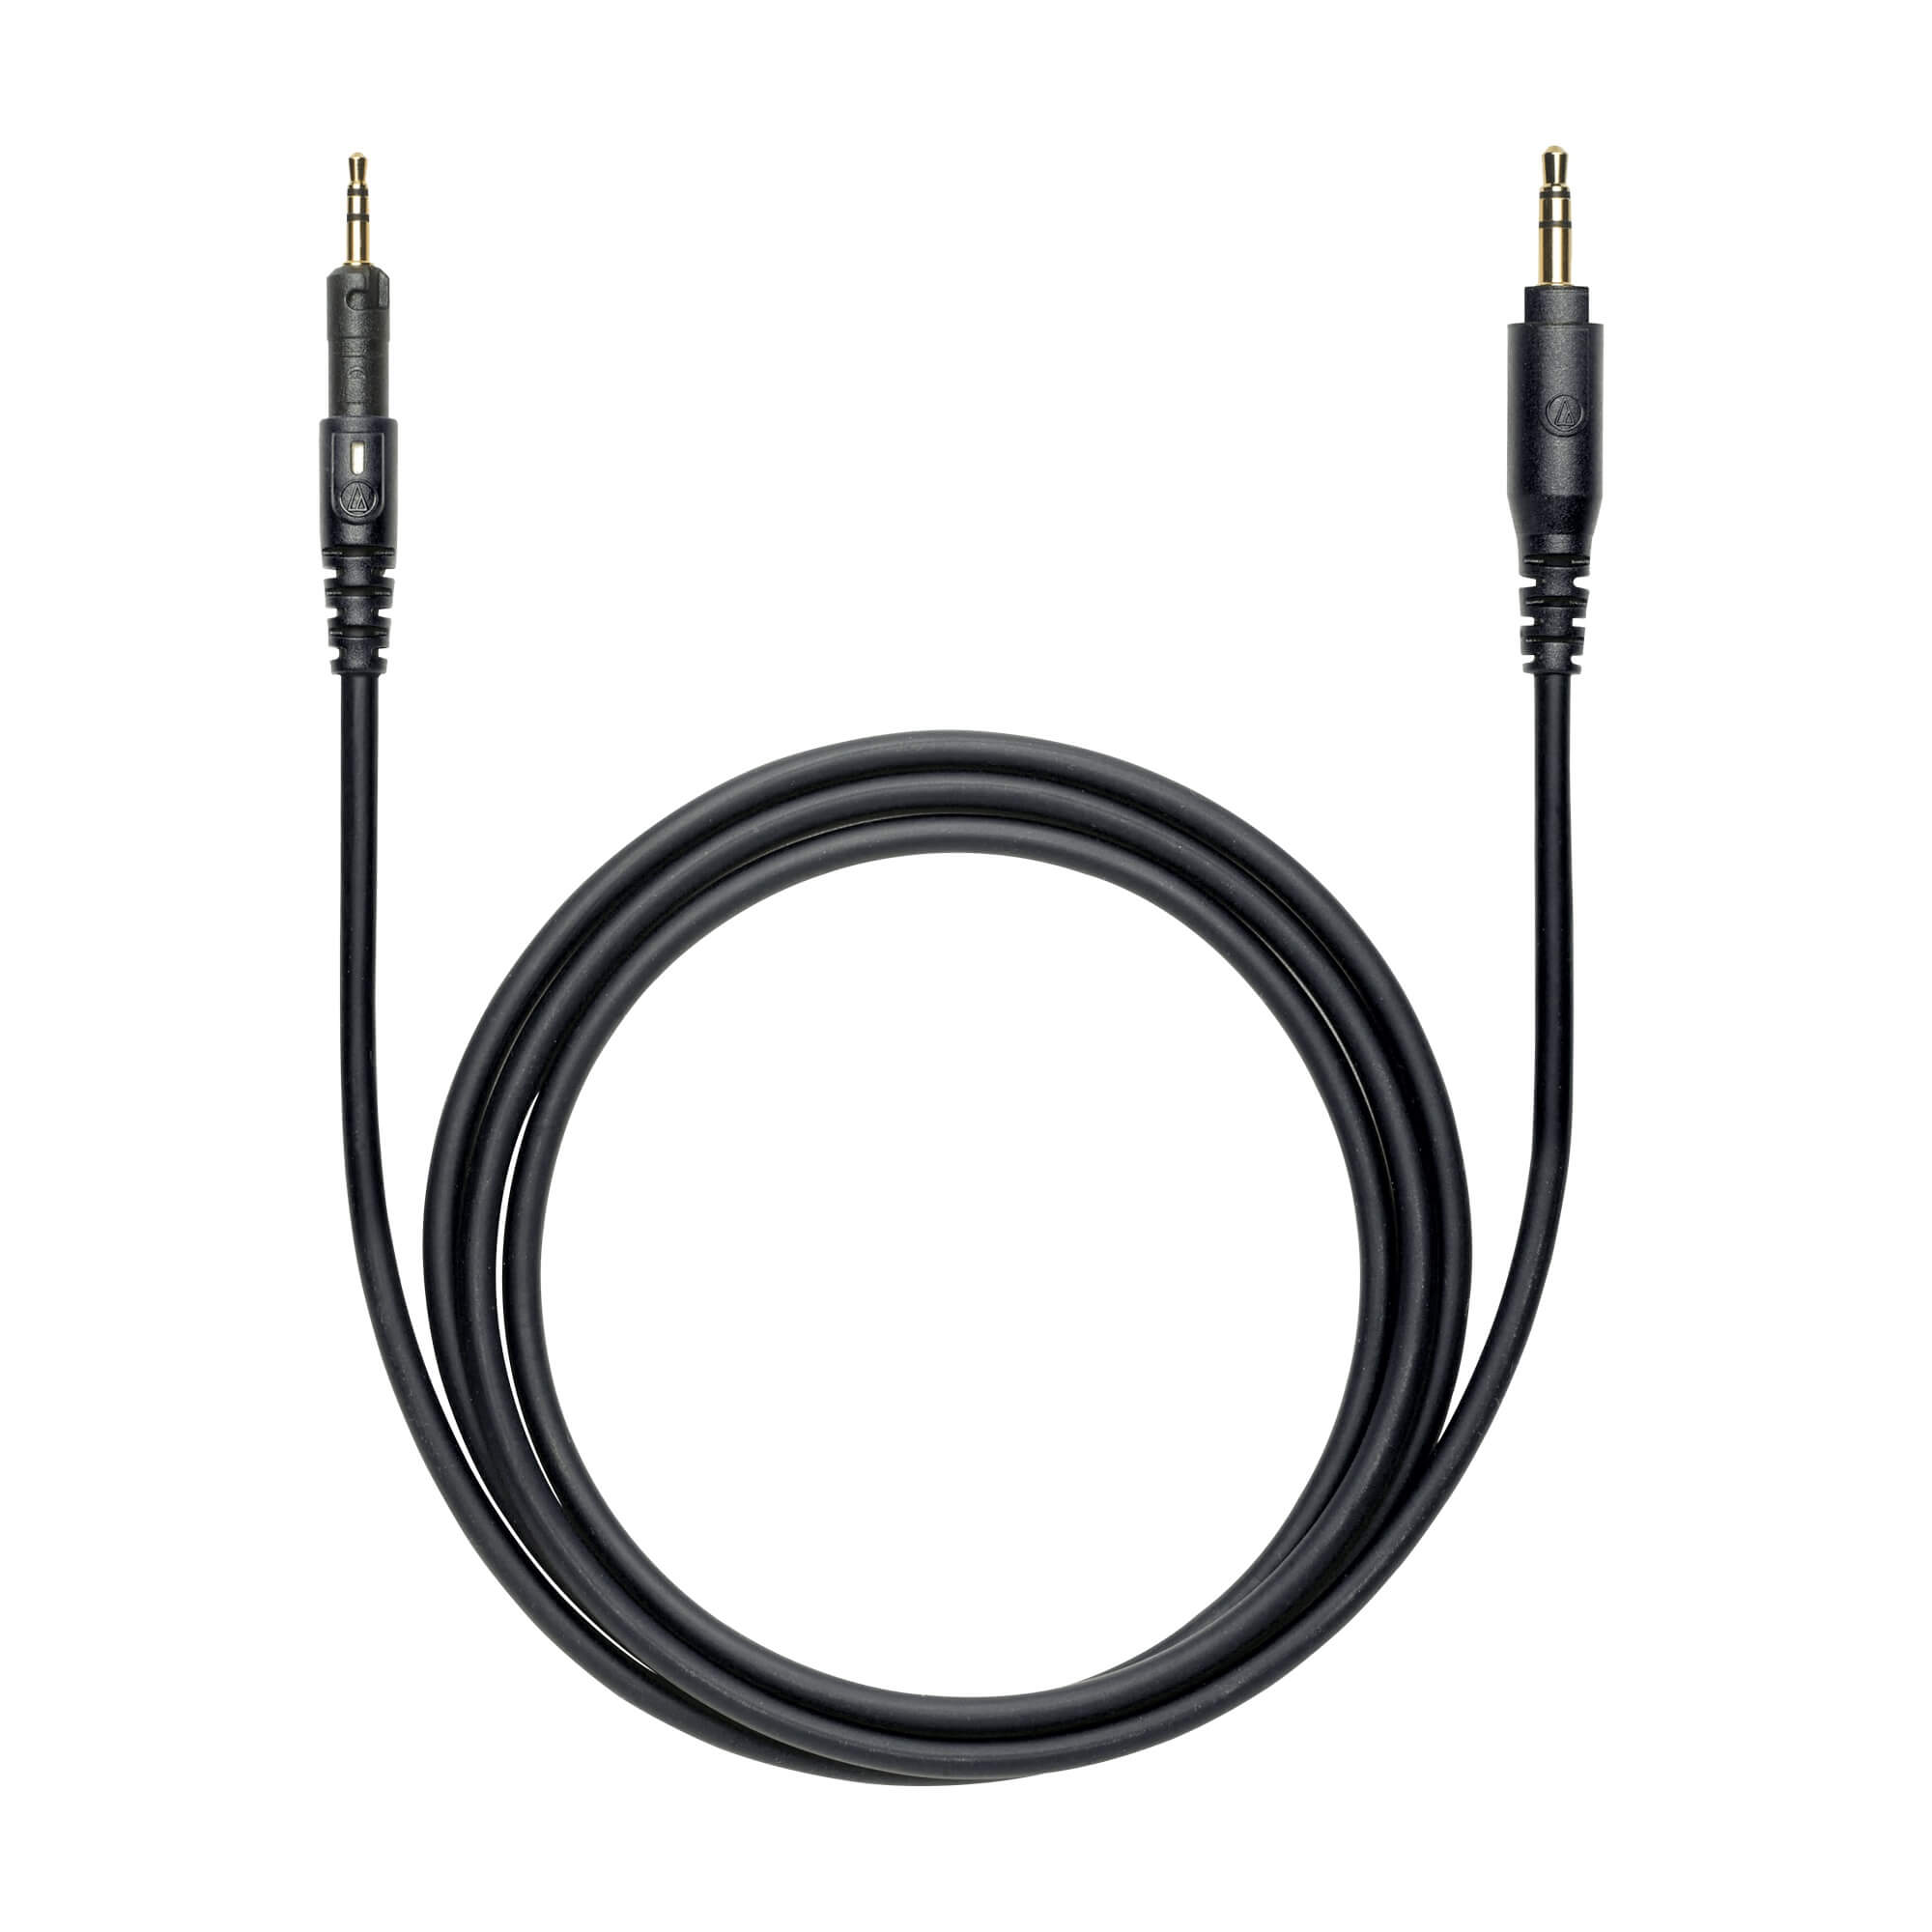 Audio-Technica ATH-M60x Professional Monitor Headphones, detachable straight audio cable